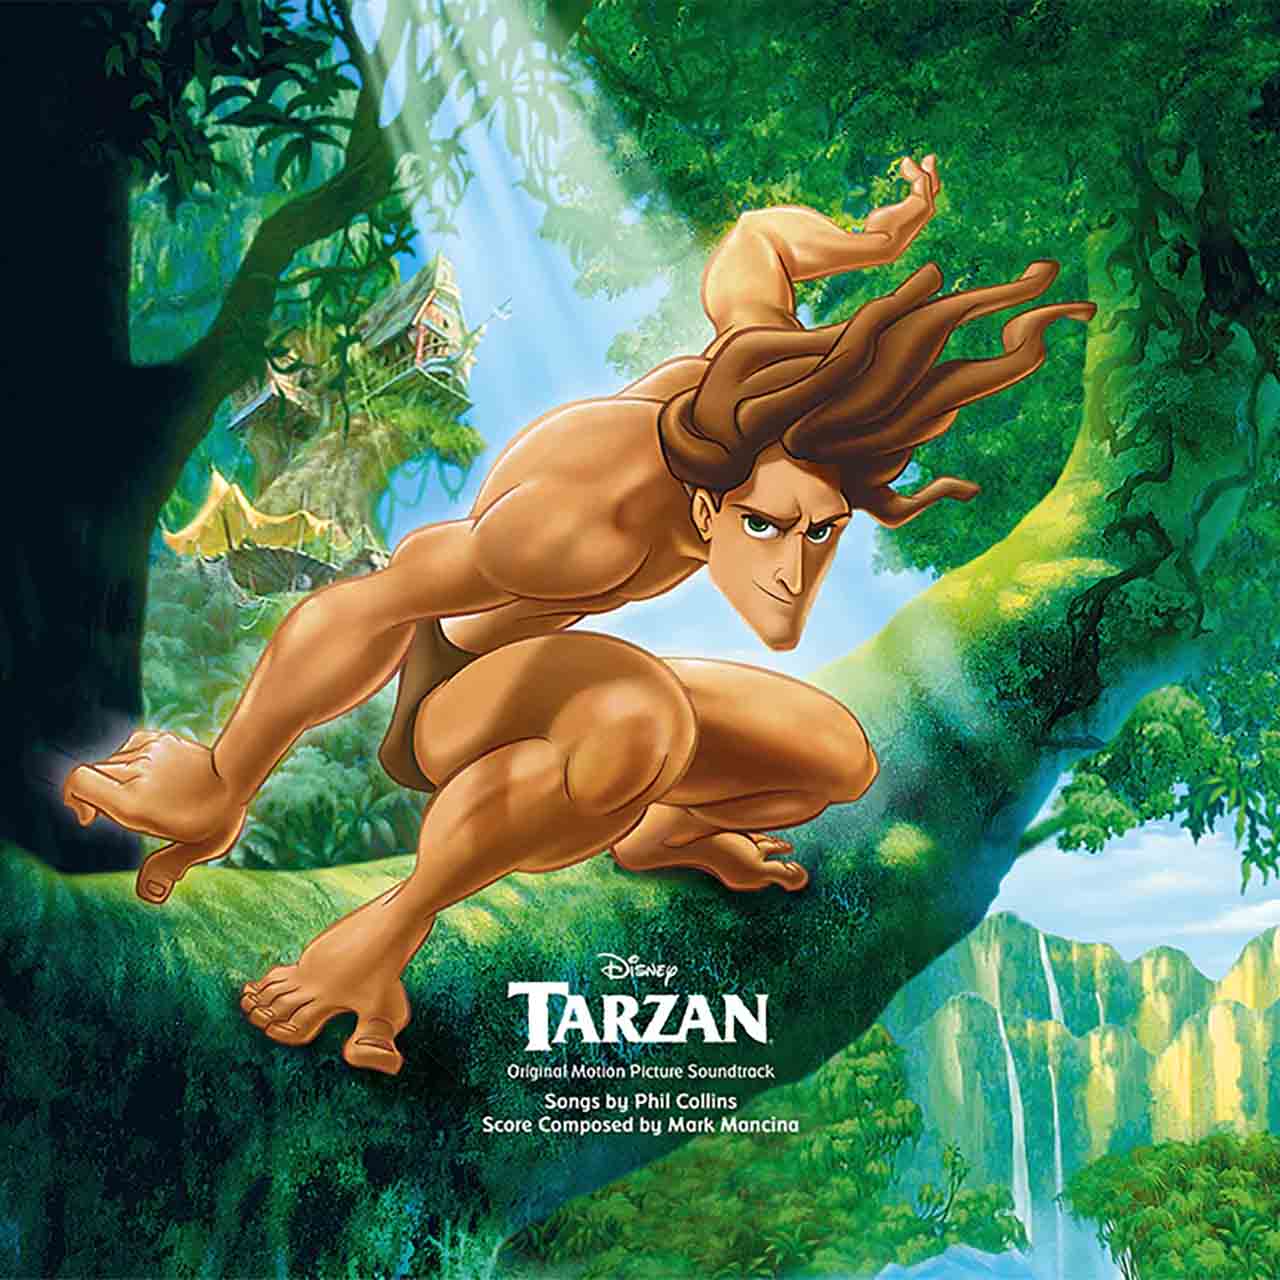 Tarzan': When Disney Called On Phil Collins